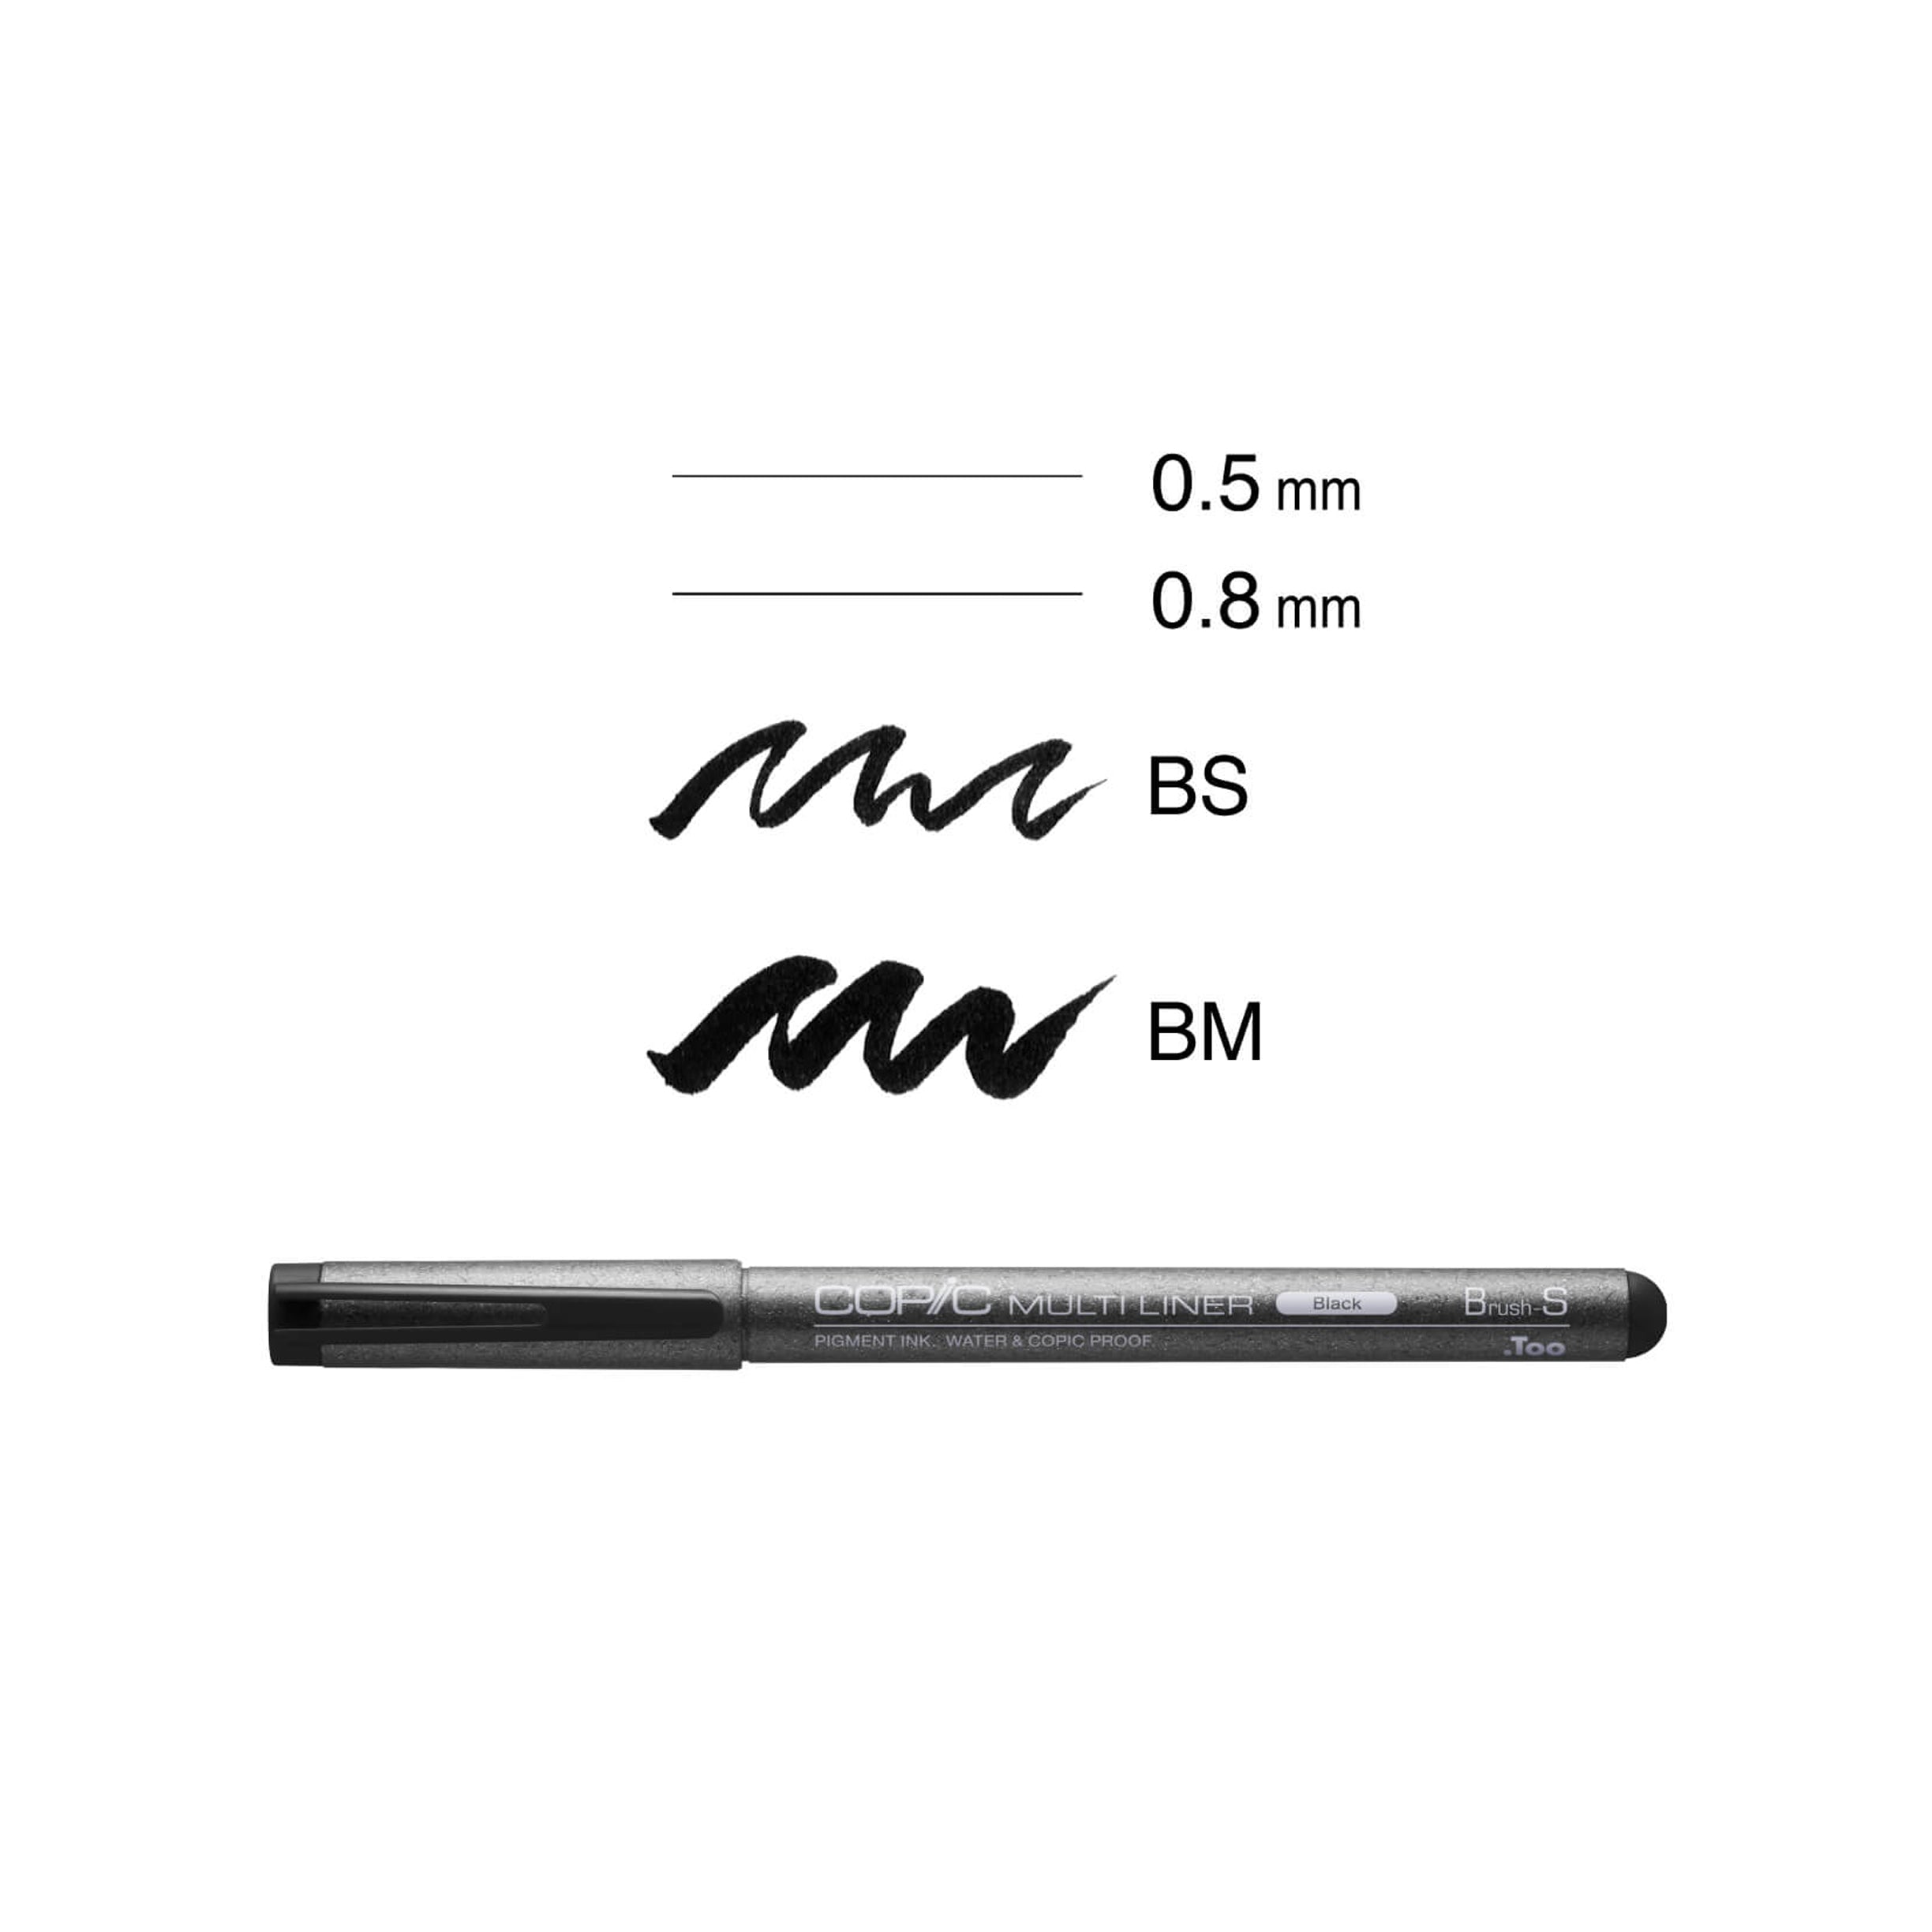 Copic : Multiliner : Pigment Pen Sets - Pen Sets - Sketching and